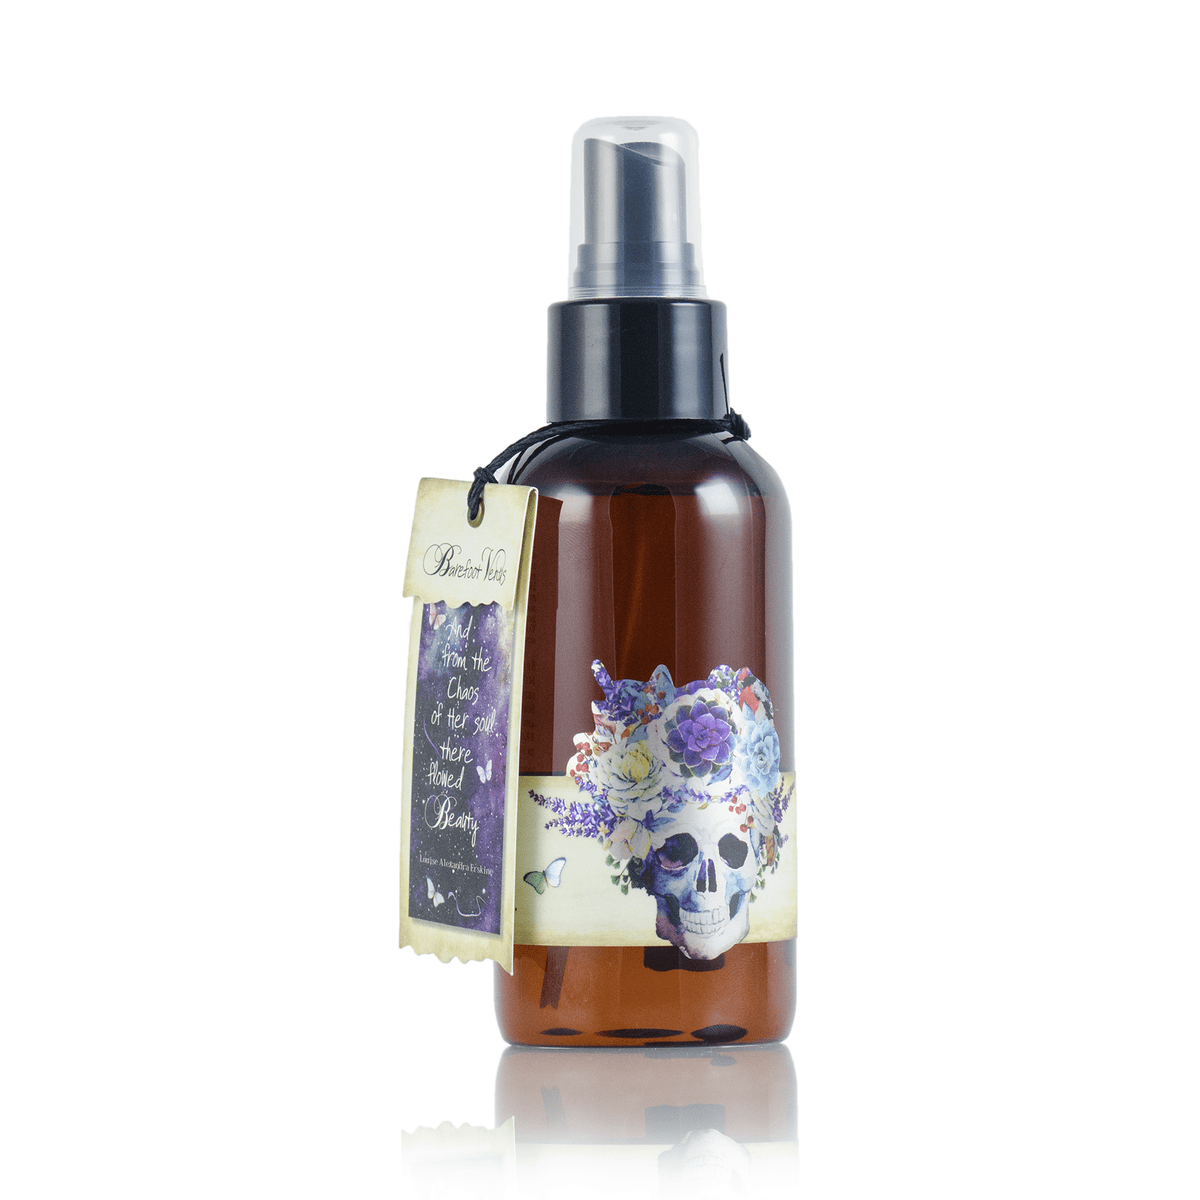 Lavender Smoke Argan Body Oil PROTECTIVE. DEWY FINISH. Barefoot Venus